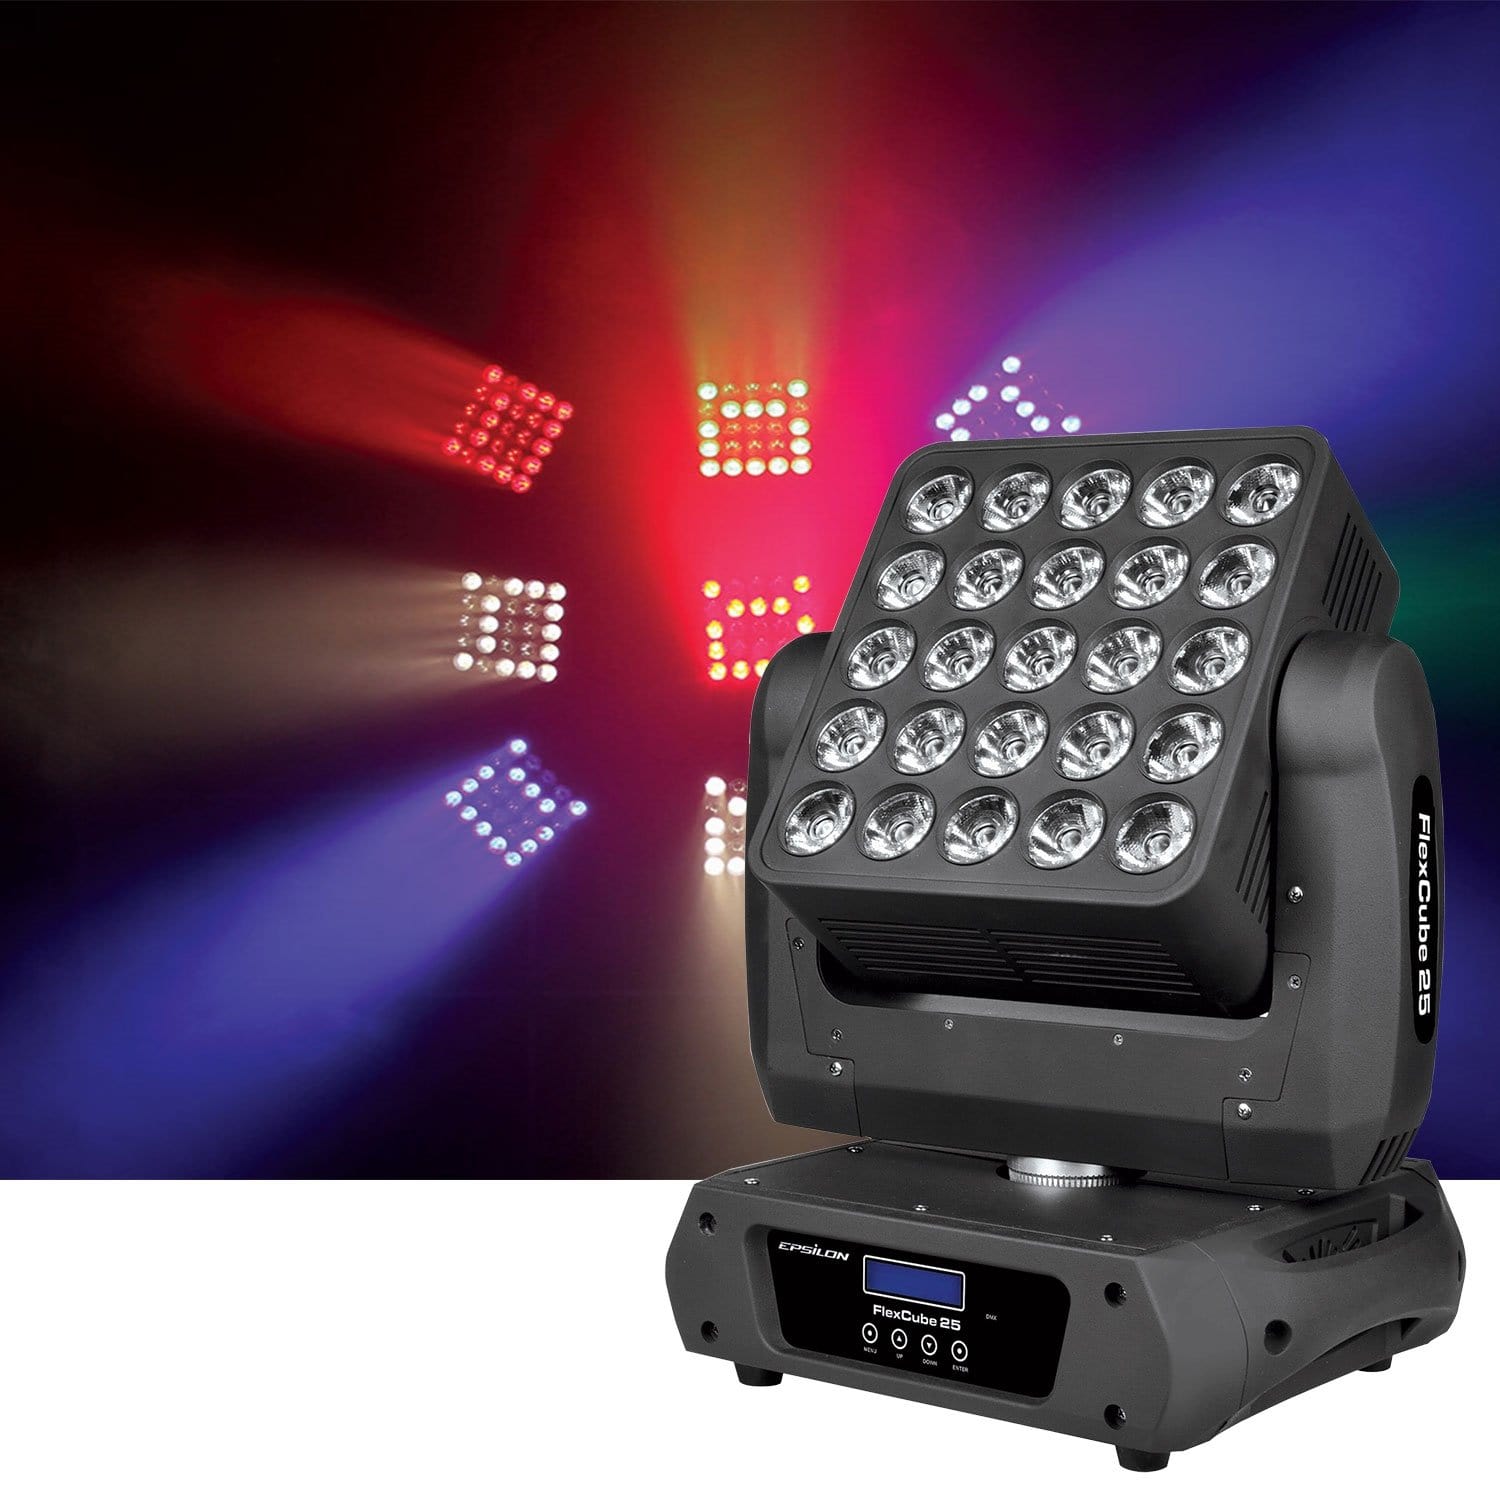 Epsilon FlexCube 25 250-Watt LED Moving Head Wash - ProSound and Stage Lighting